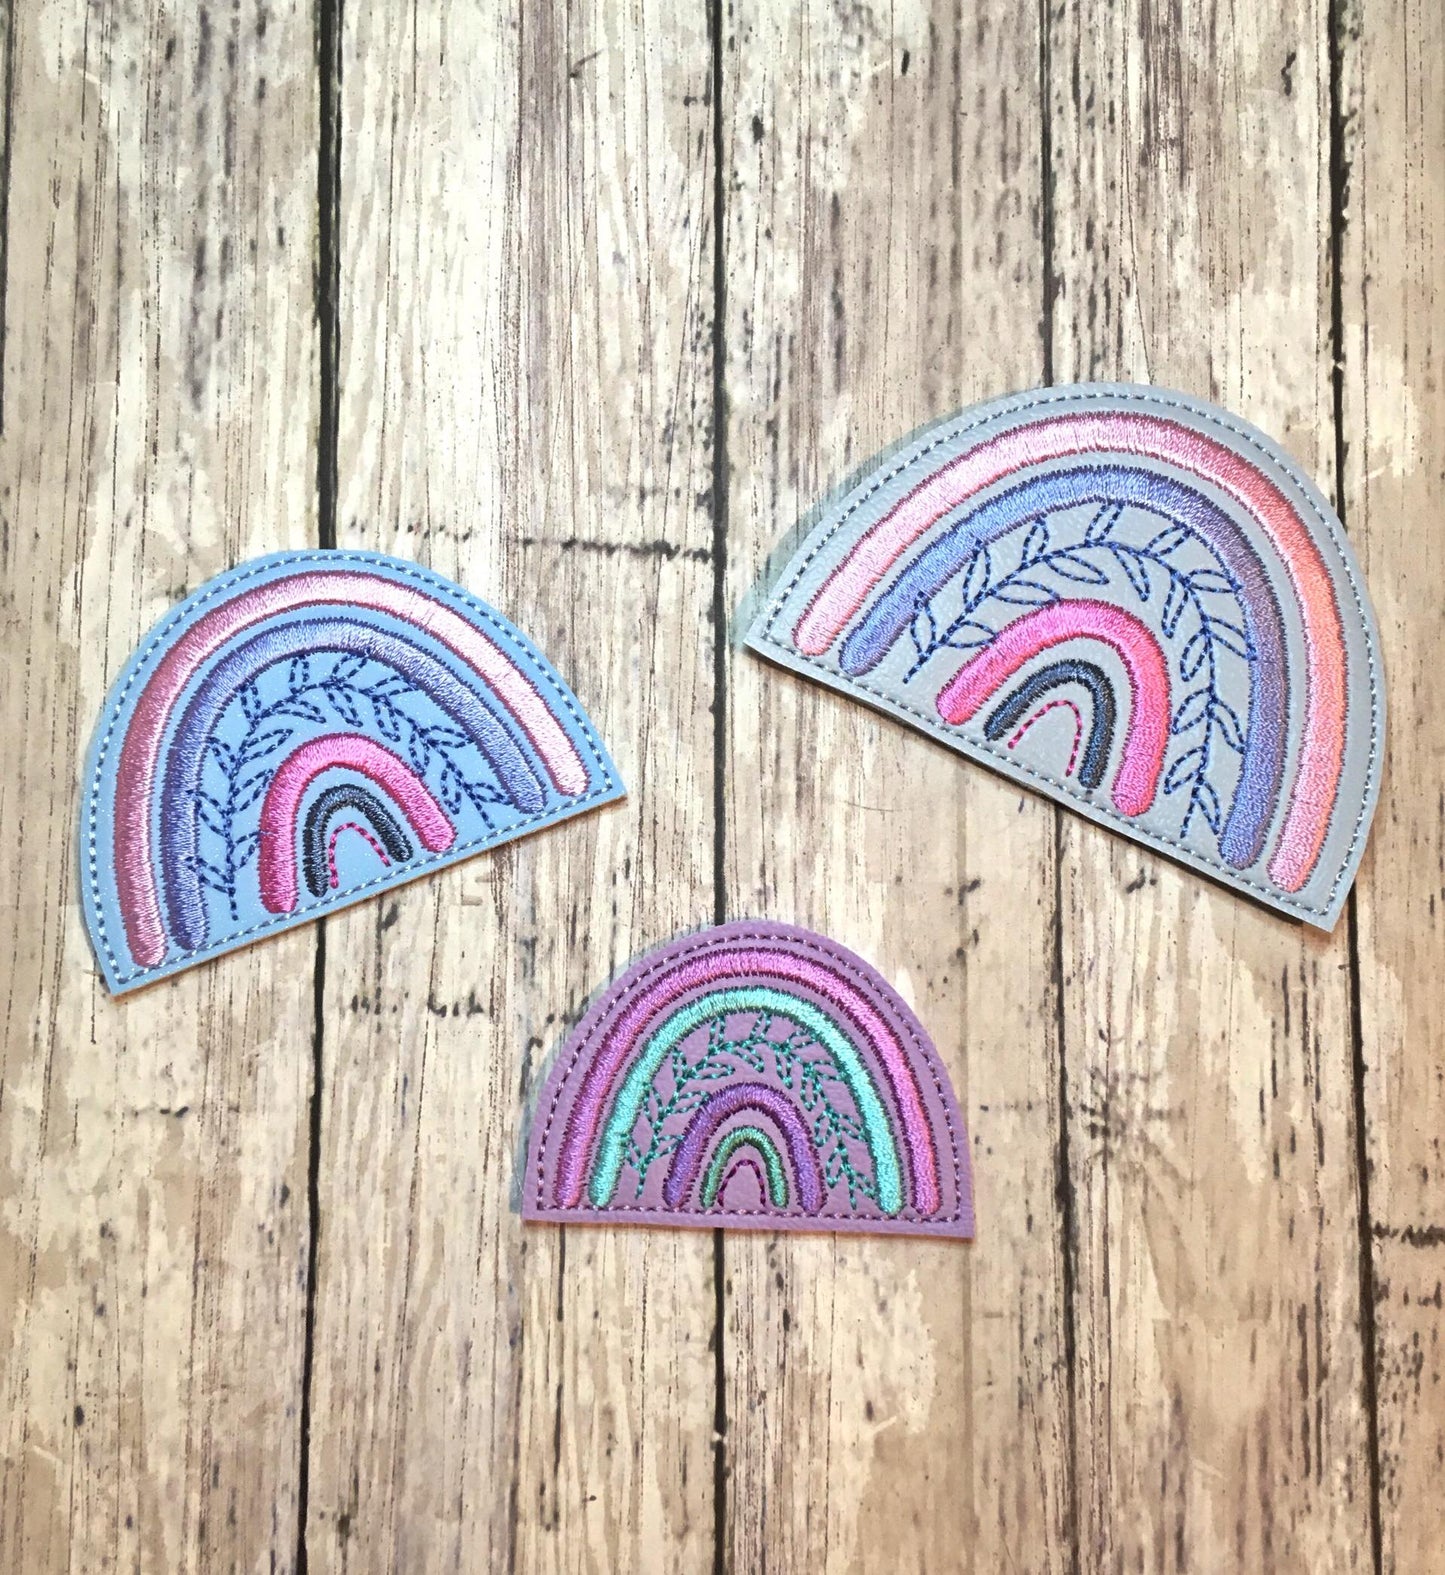 Boho Rainbow Felties - 3 sizes - 4x4 and 5x7 Grouped- Digital Embroidery Design